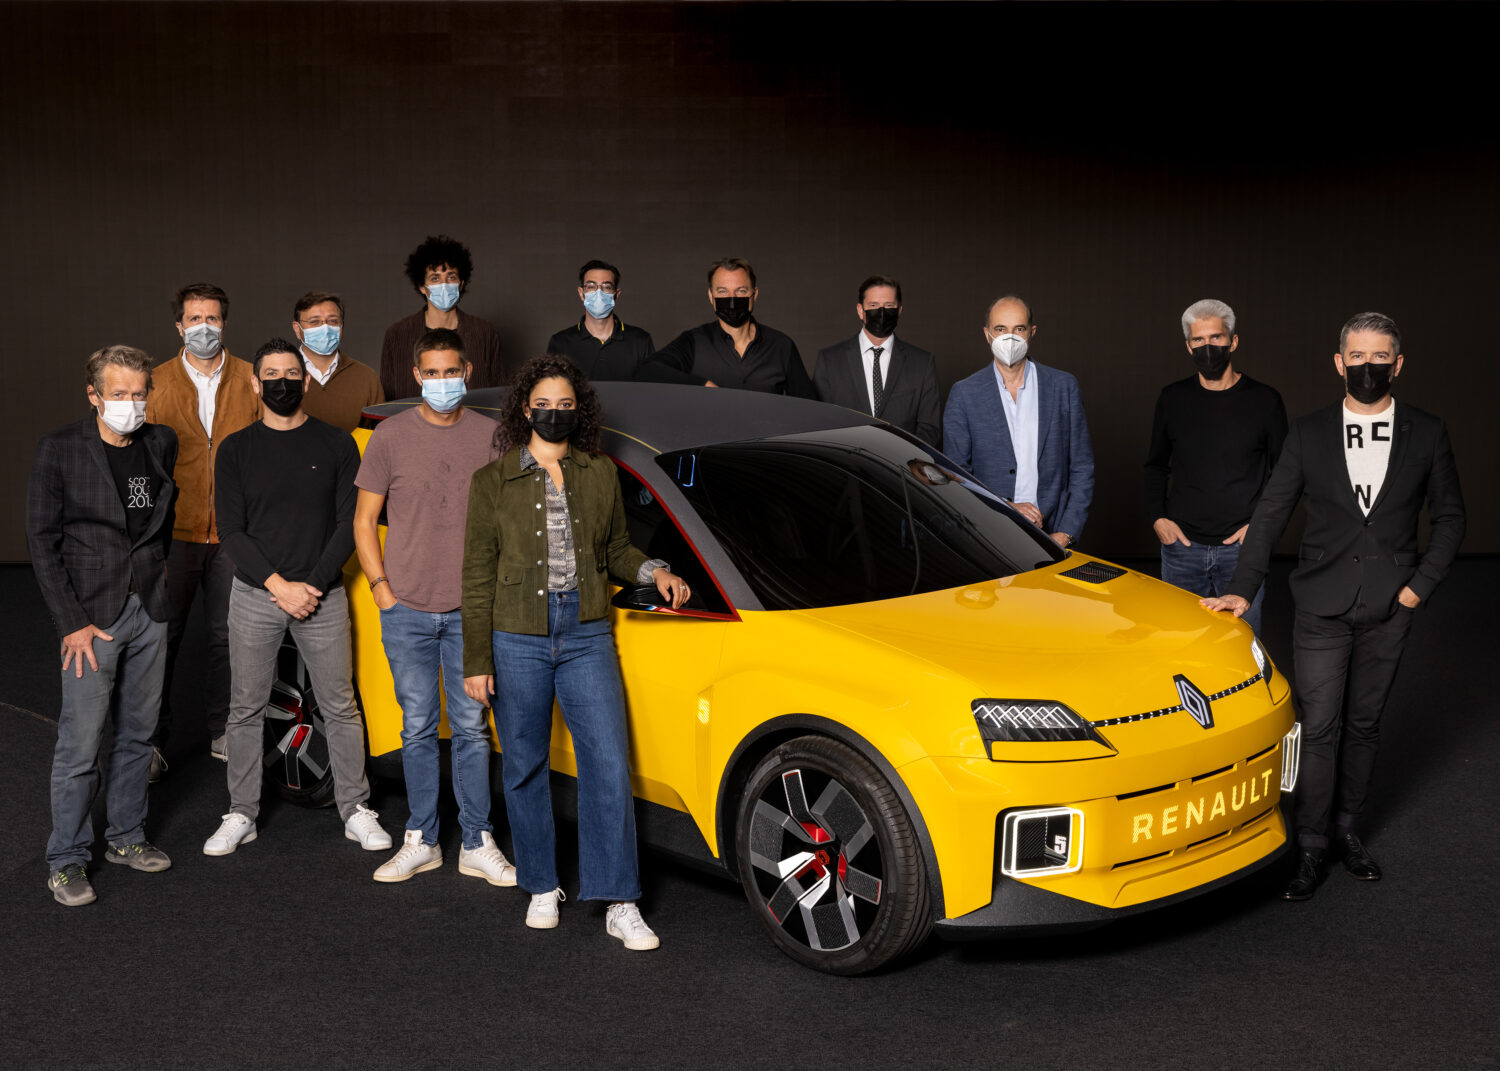 2021 - Renault 5 Prototype élu Concept-Car of the Year